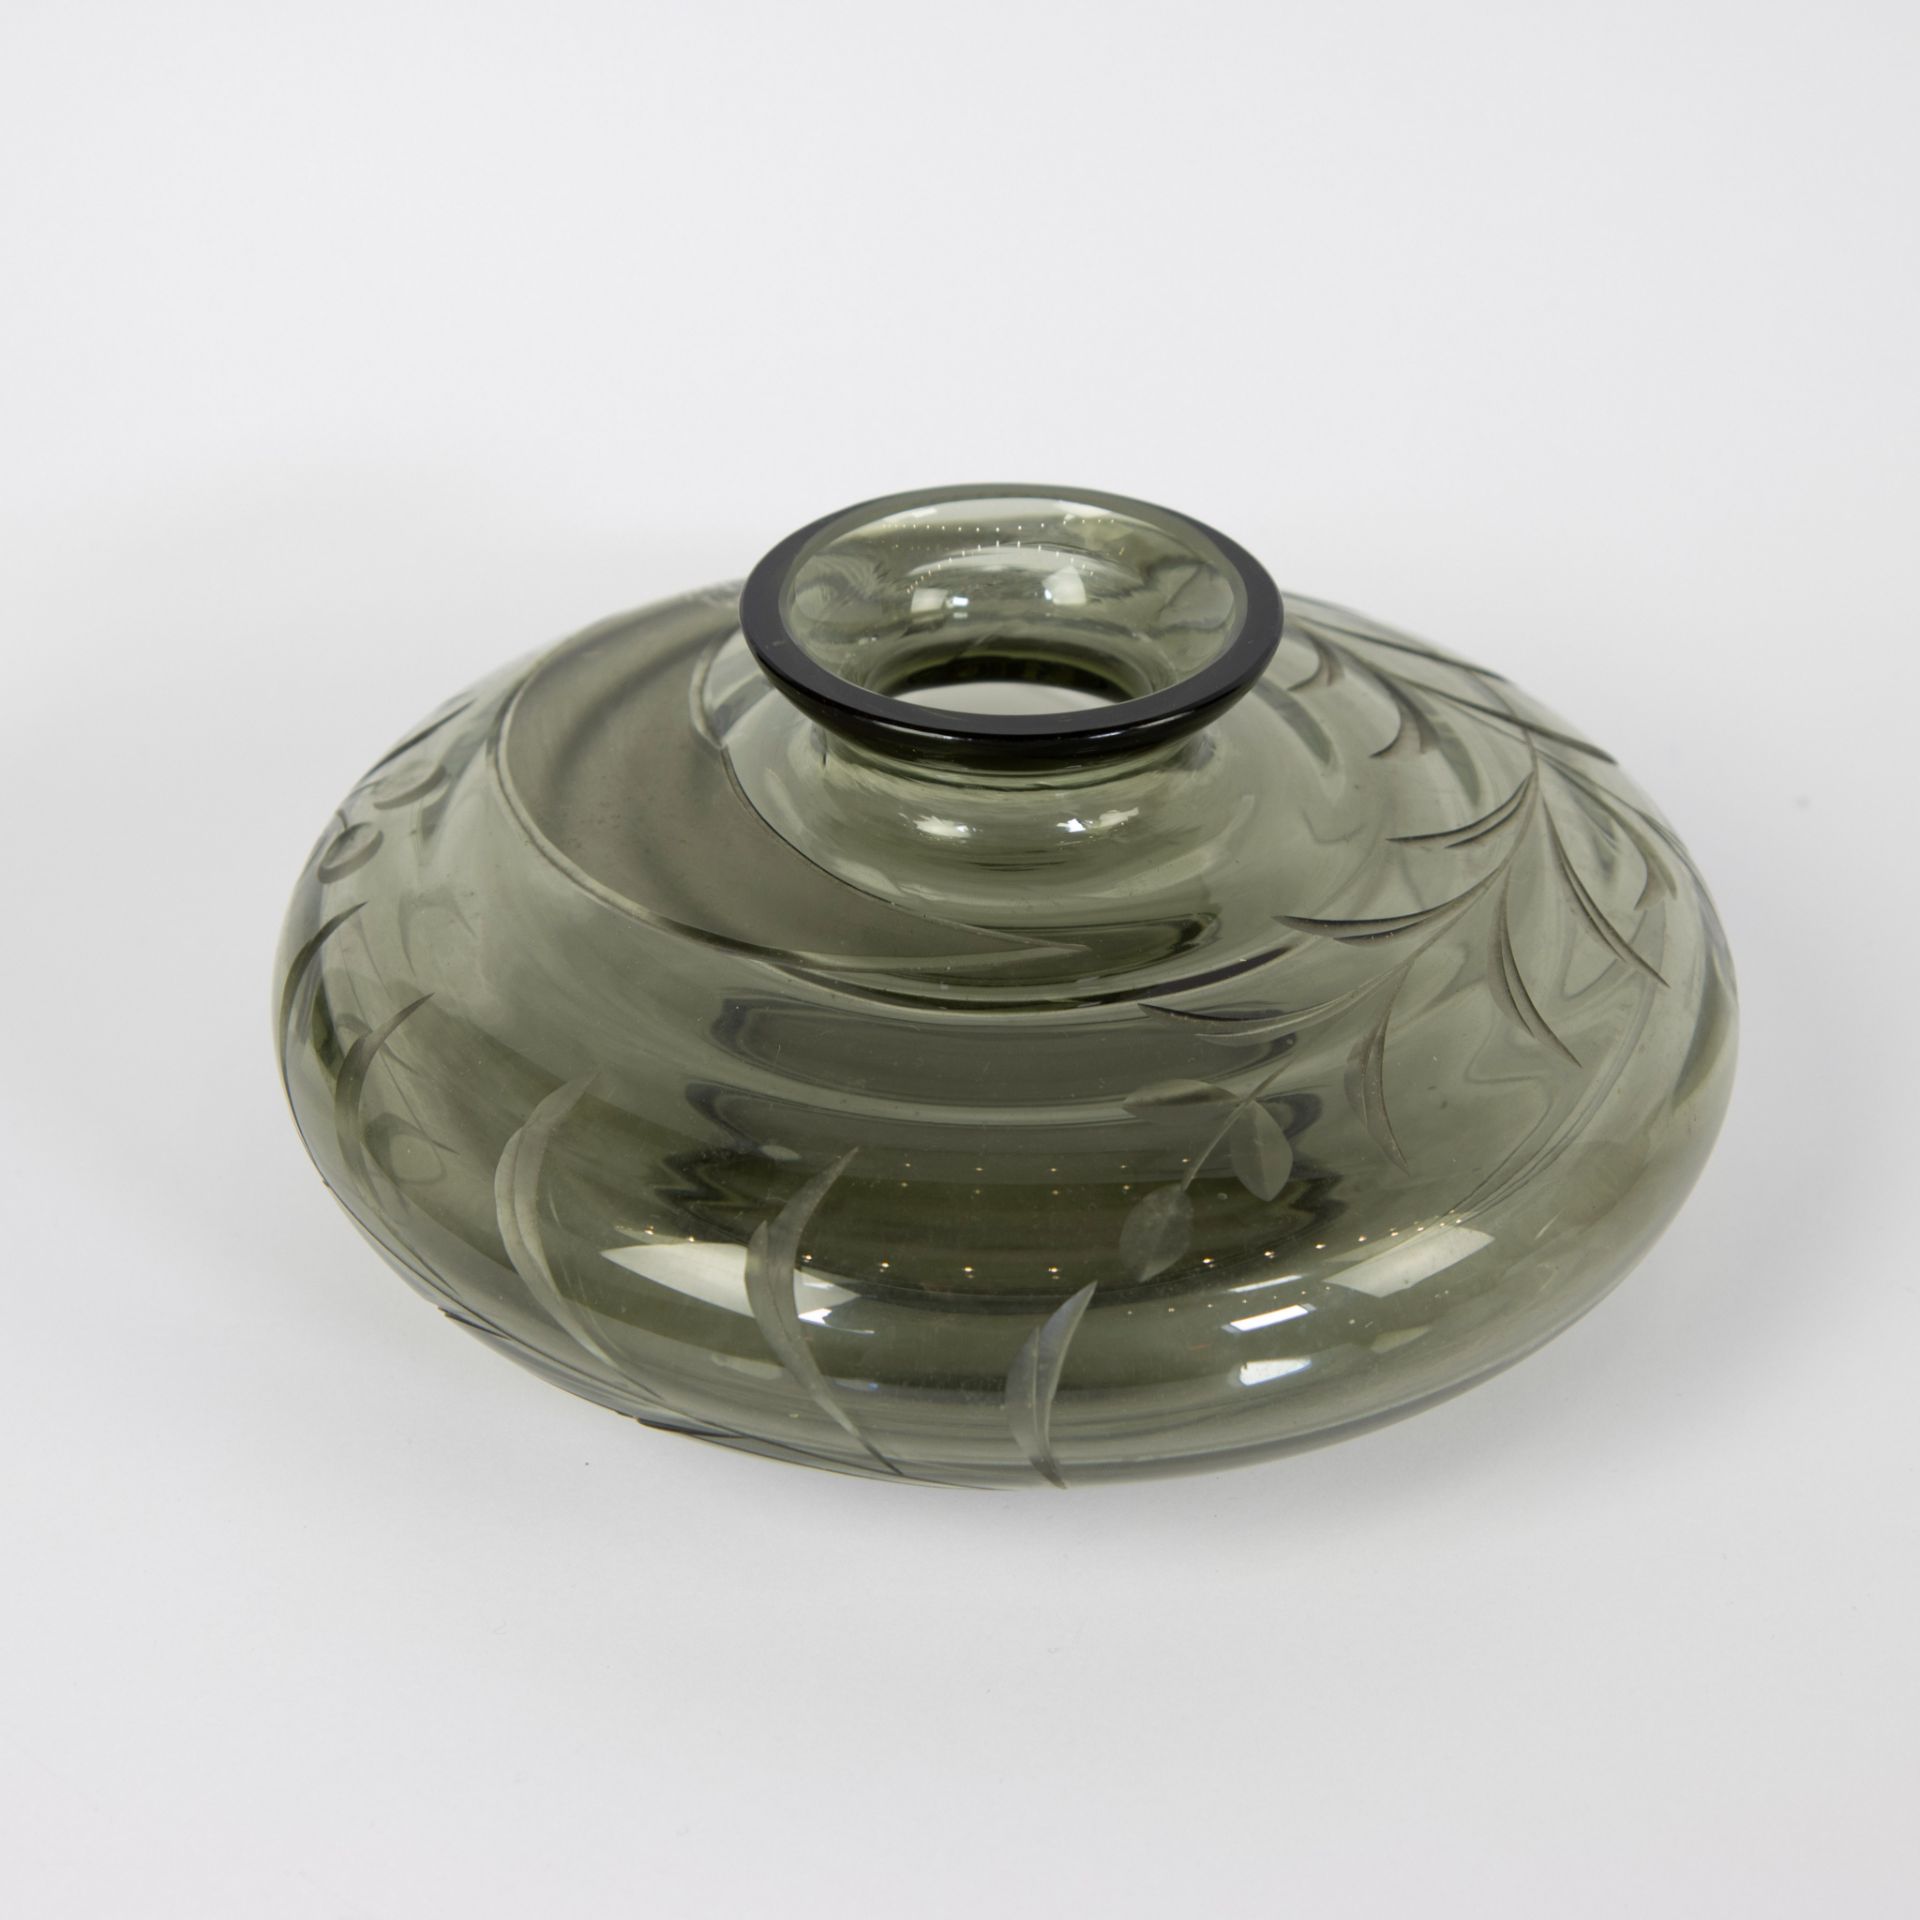 Lot glassware Art Deco ball vase and pique fleur Art Nouveau, green glass ornamental coupe in silver - Image 2 of 7